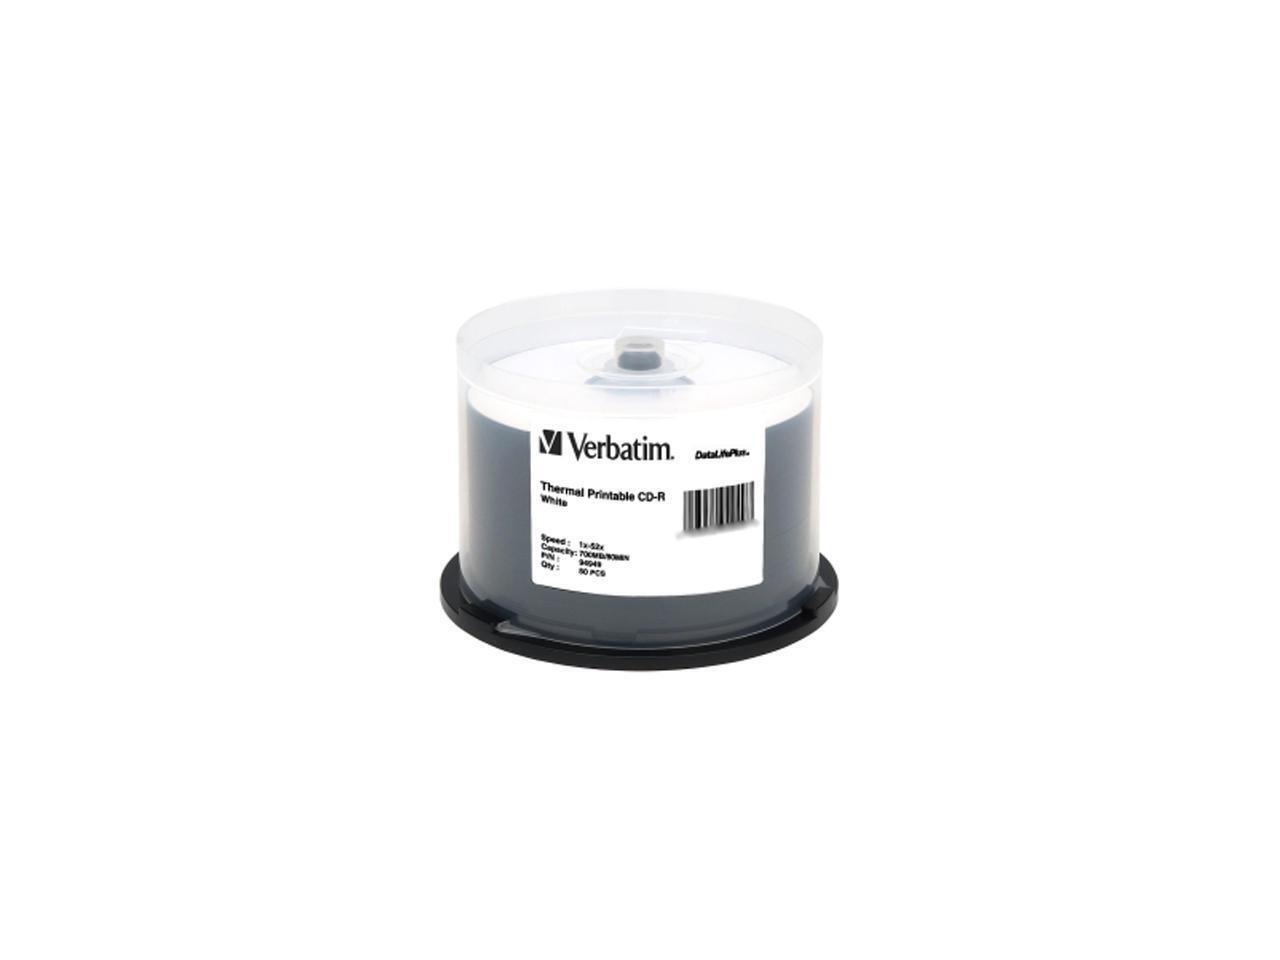 Verbatim CD-R 80MIN 700MB 52X DataLifePlus White Thermal Printable, 50pk Spindle